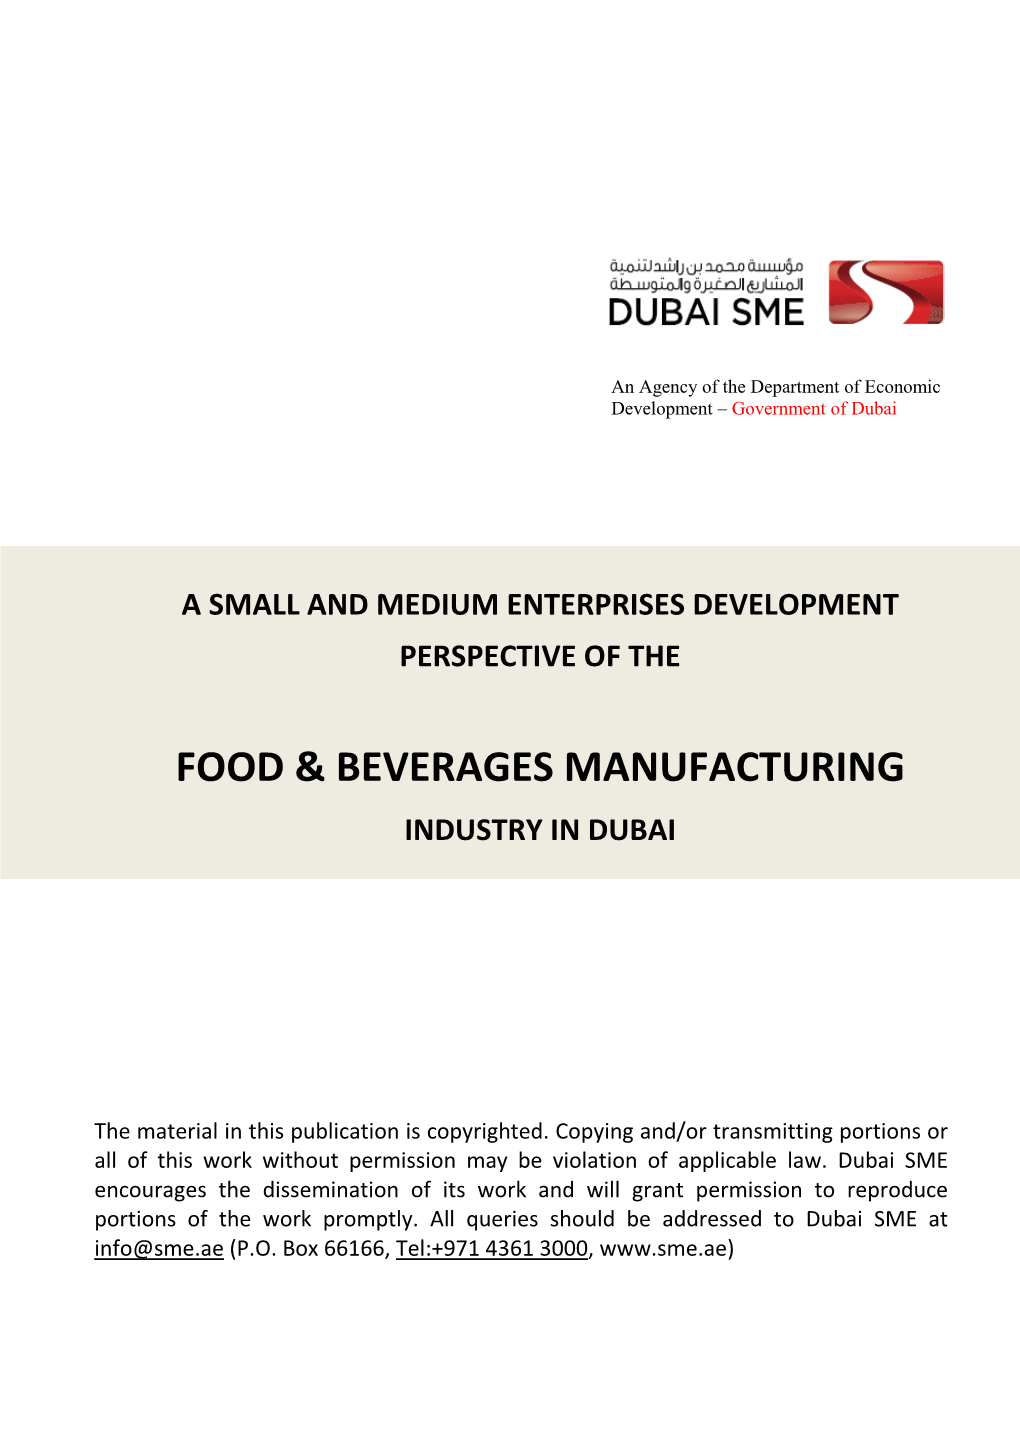 Food & Beverages Manufacturing